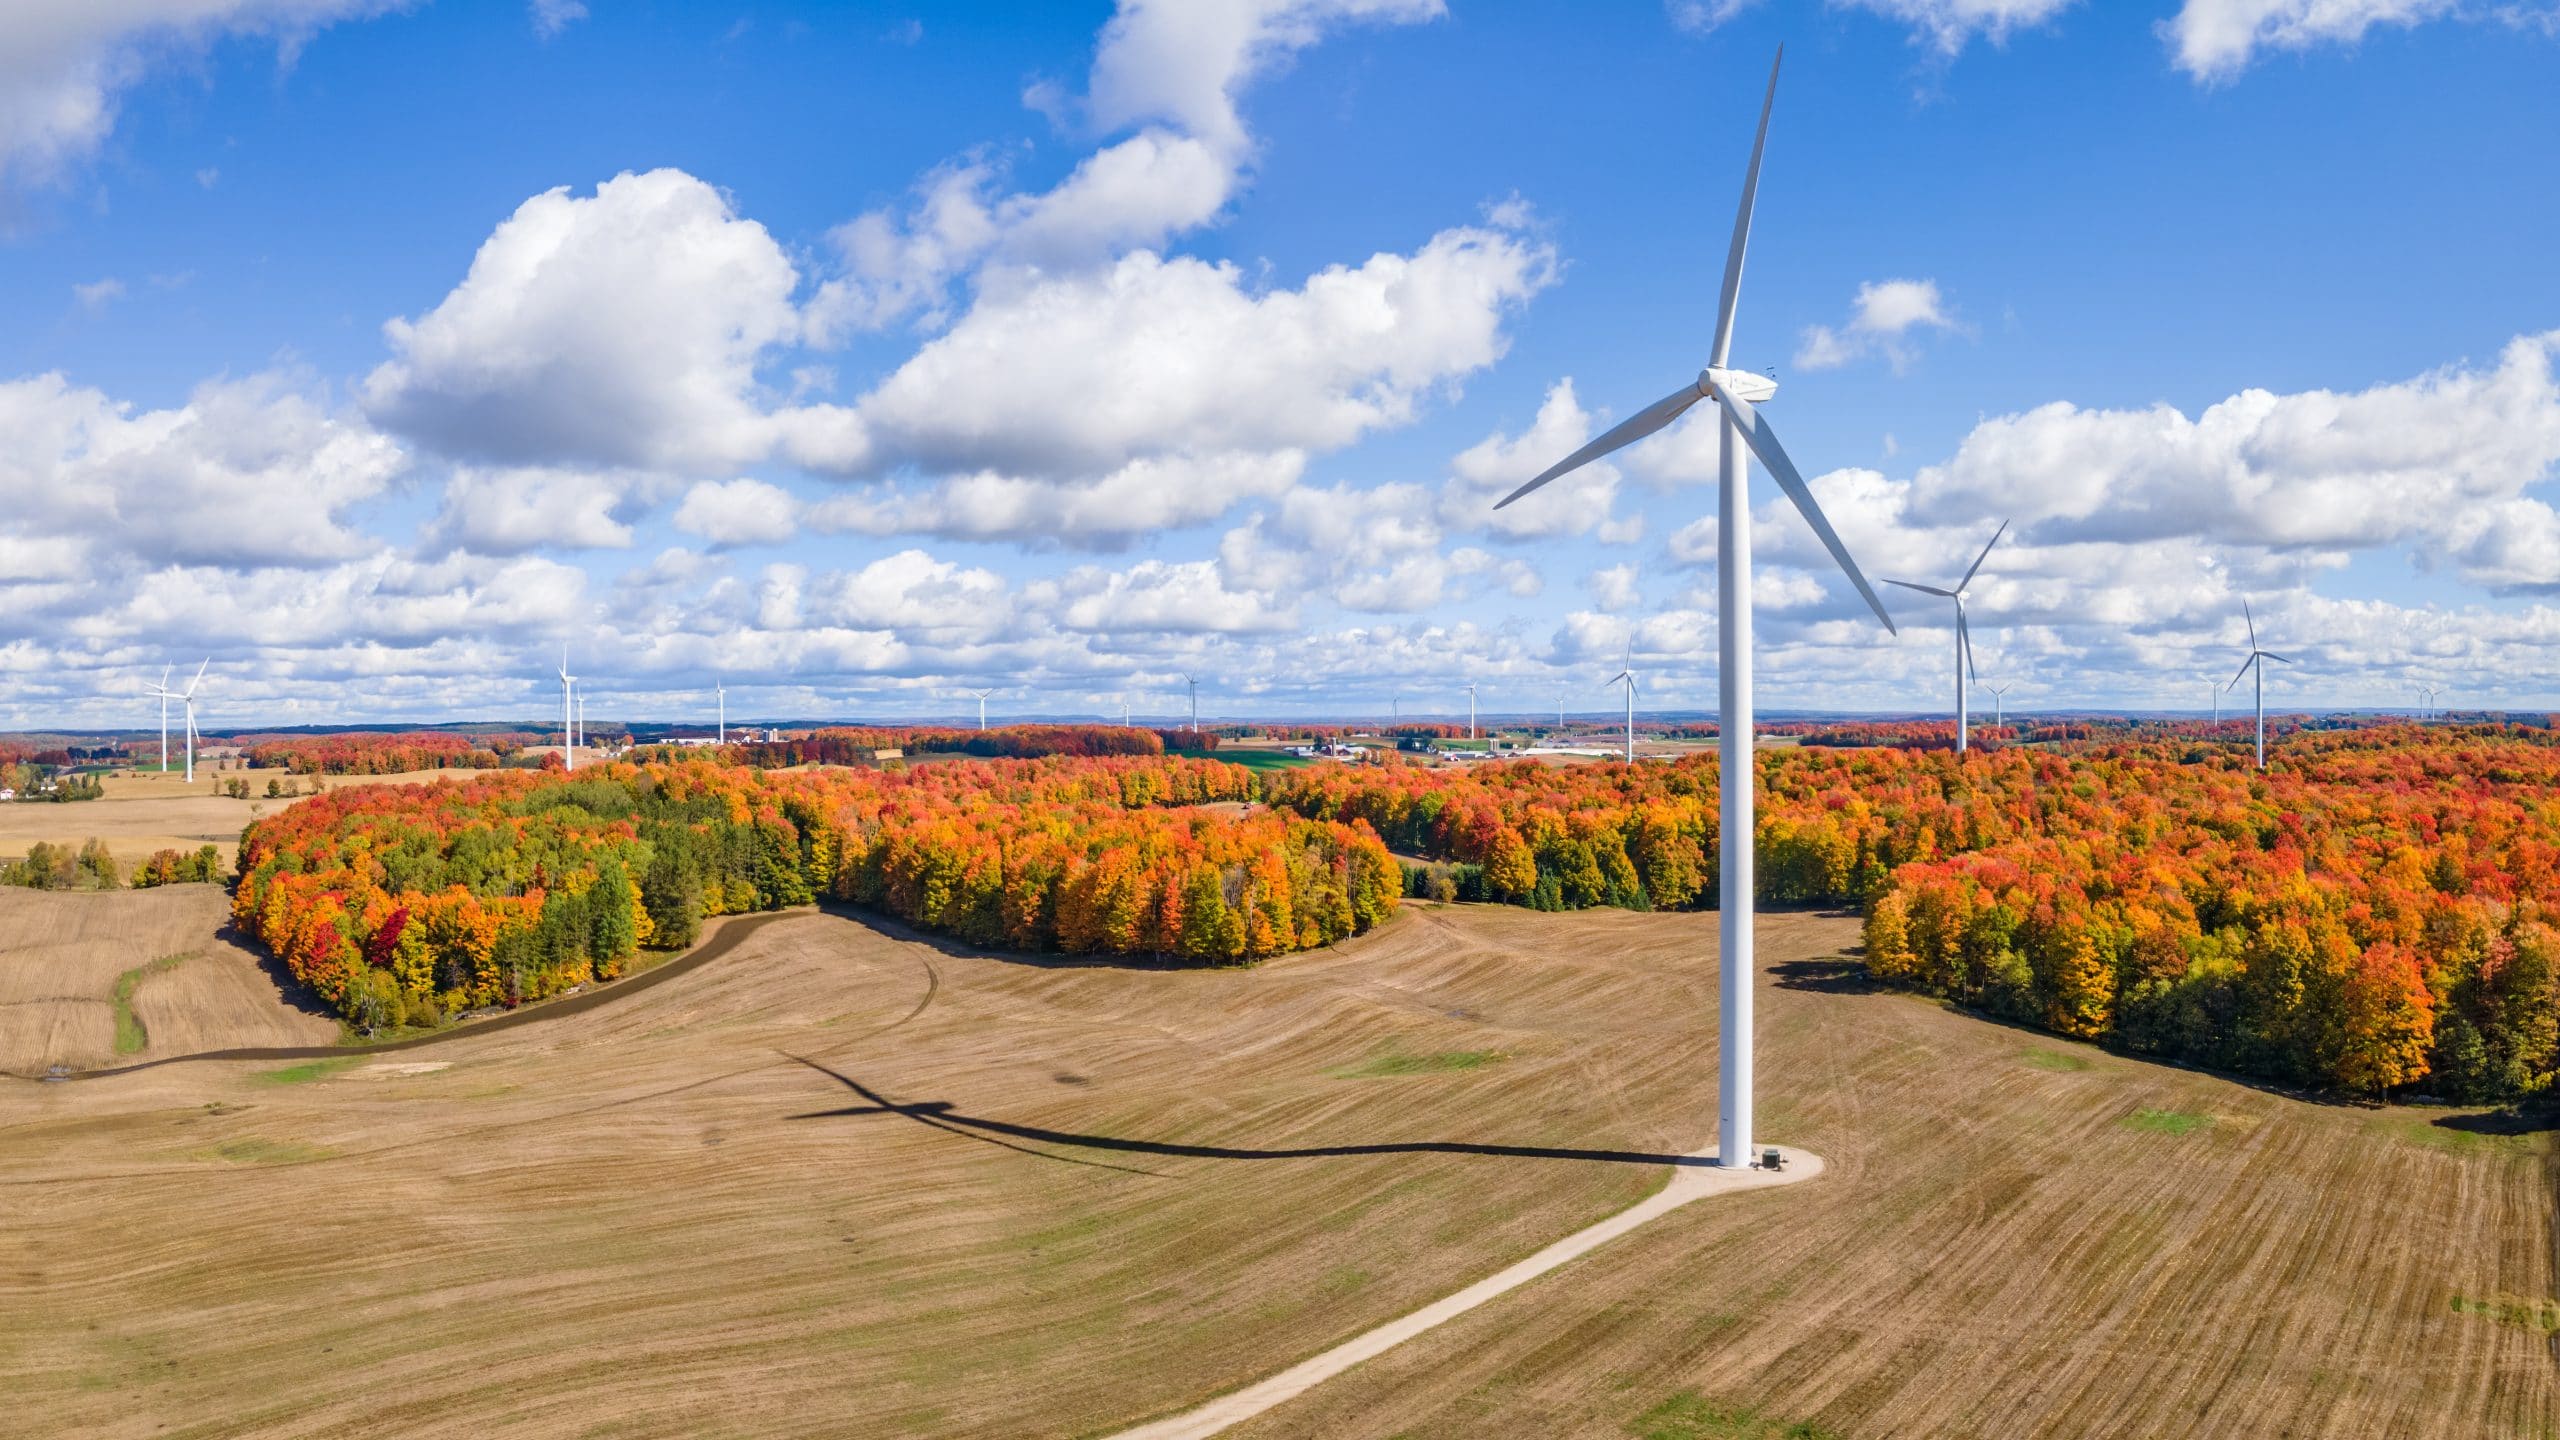 Autumn sunny day with wind turbines in central Michigan farmland near Cadillac Michigan